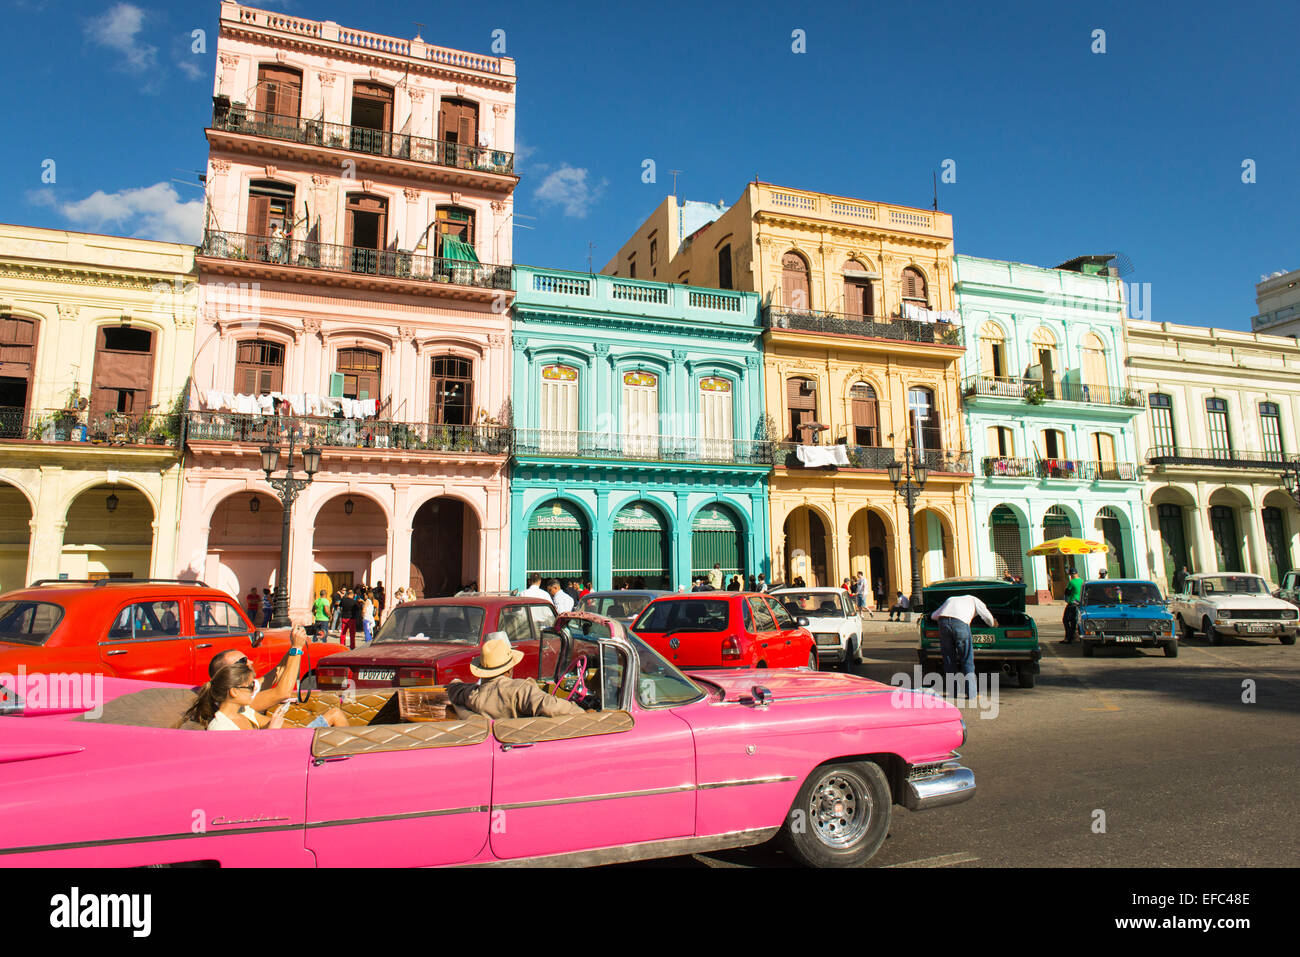 Cuba Central Havana Centro Habana Prado Paseo de Marti bright pink US American 1950's 50's cars colourful colorful buildings Stock Photo